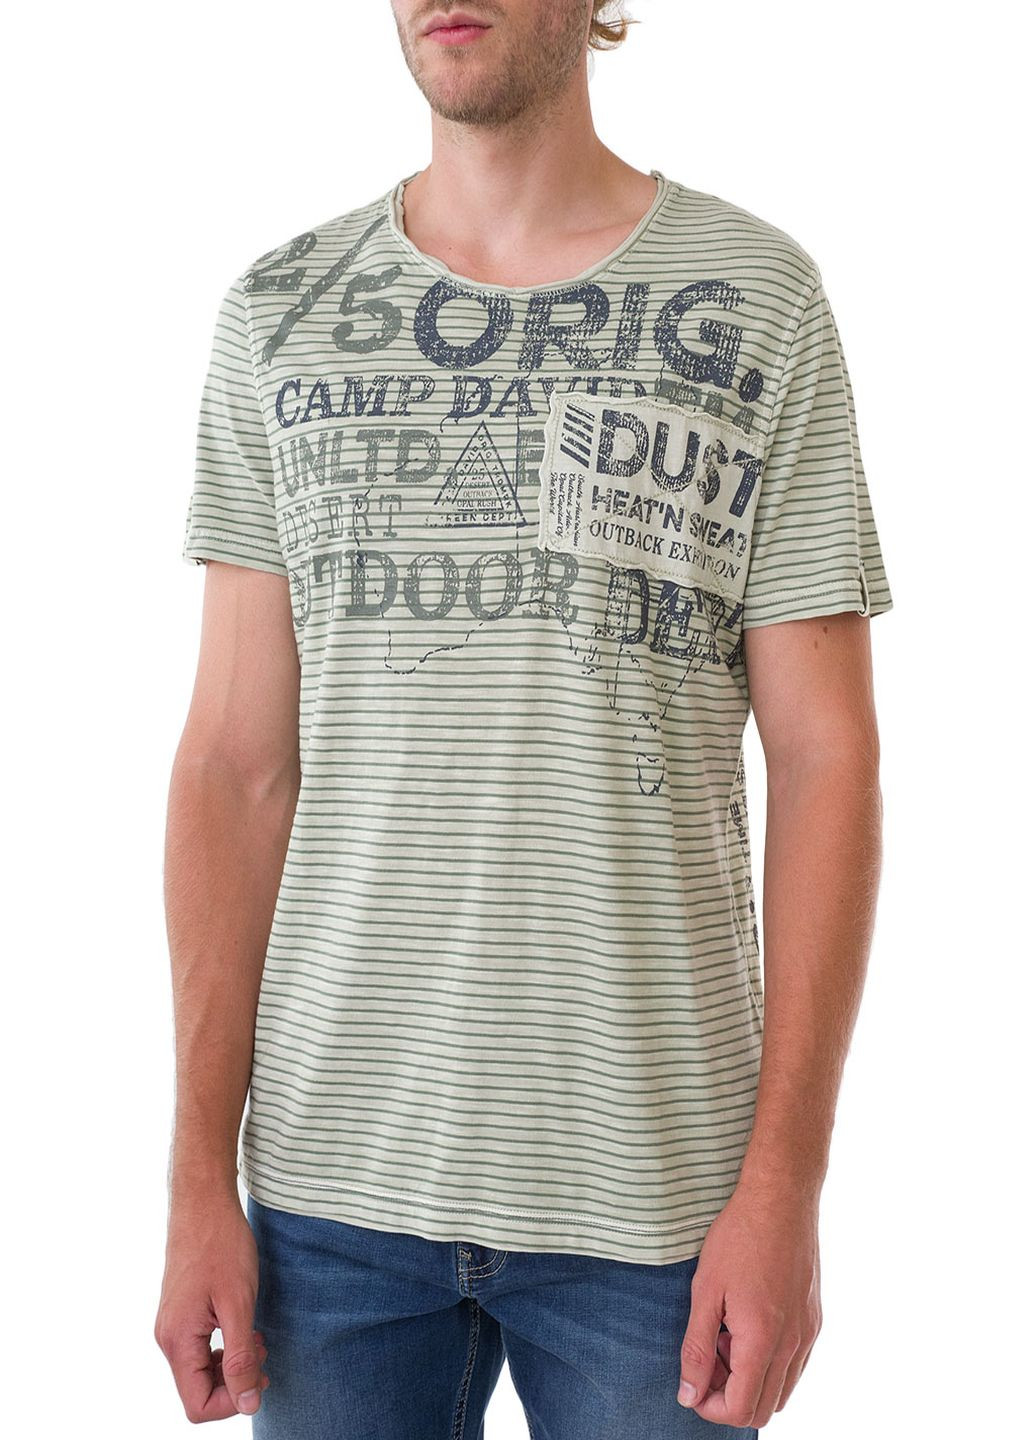 Оливковая футболка Camp David